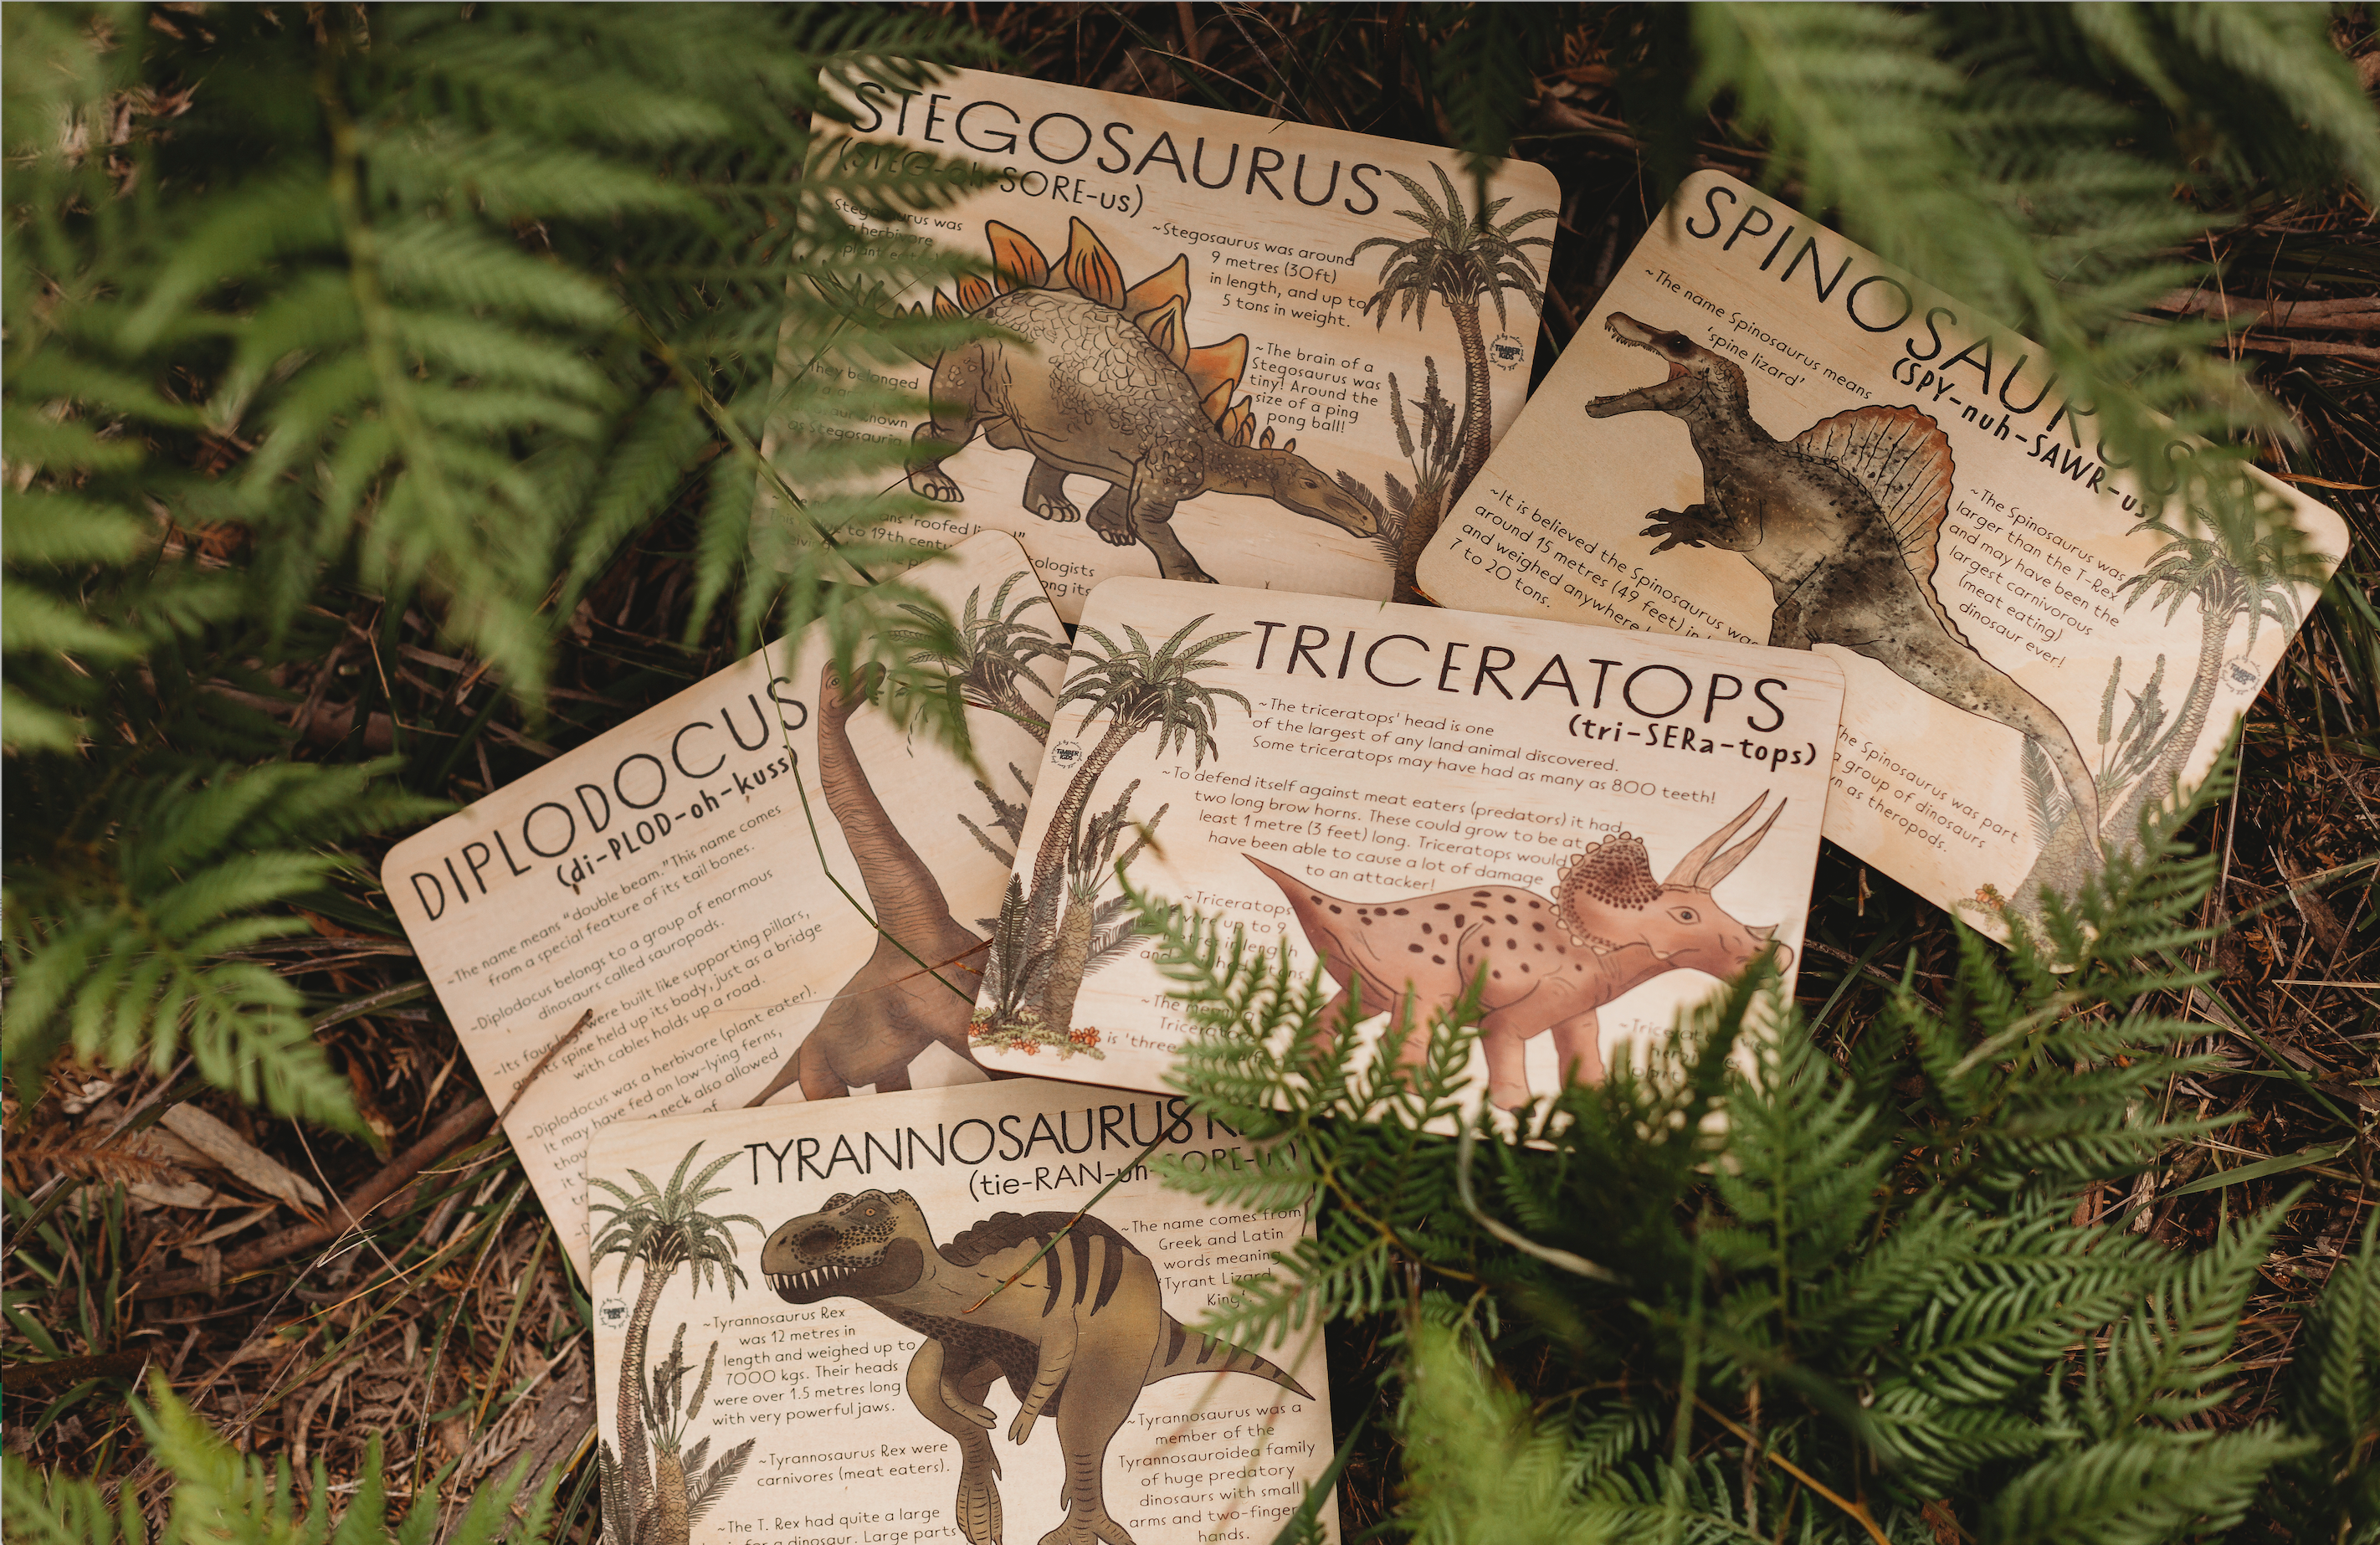 Stegosaurus Jumbo Dino Fact Tile -  | Timber Kids - Timber Kids 